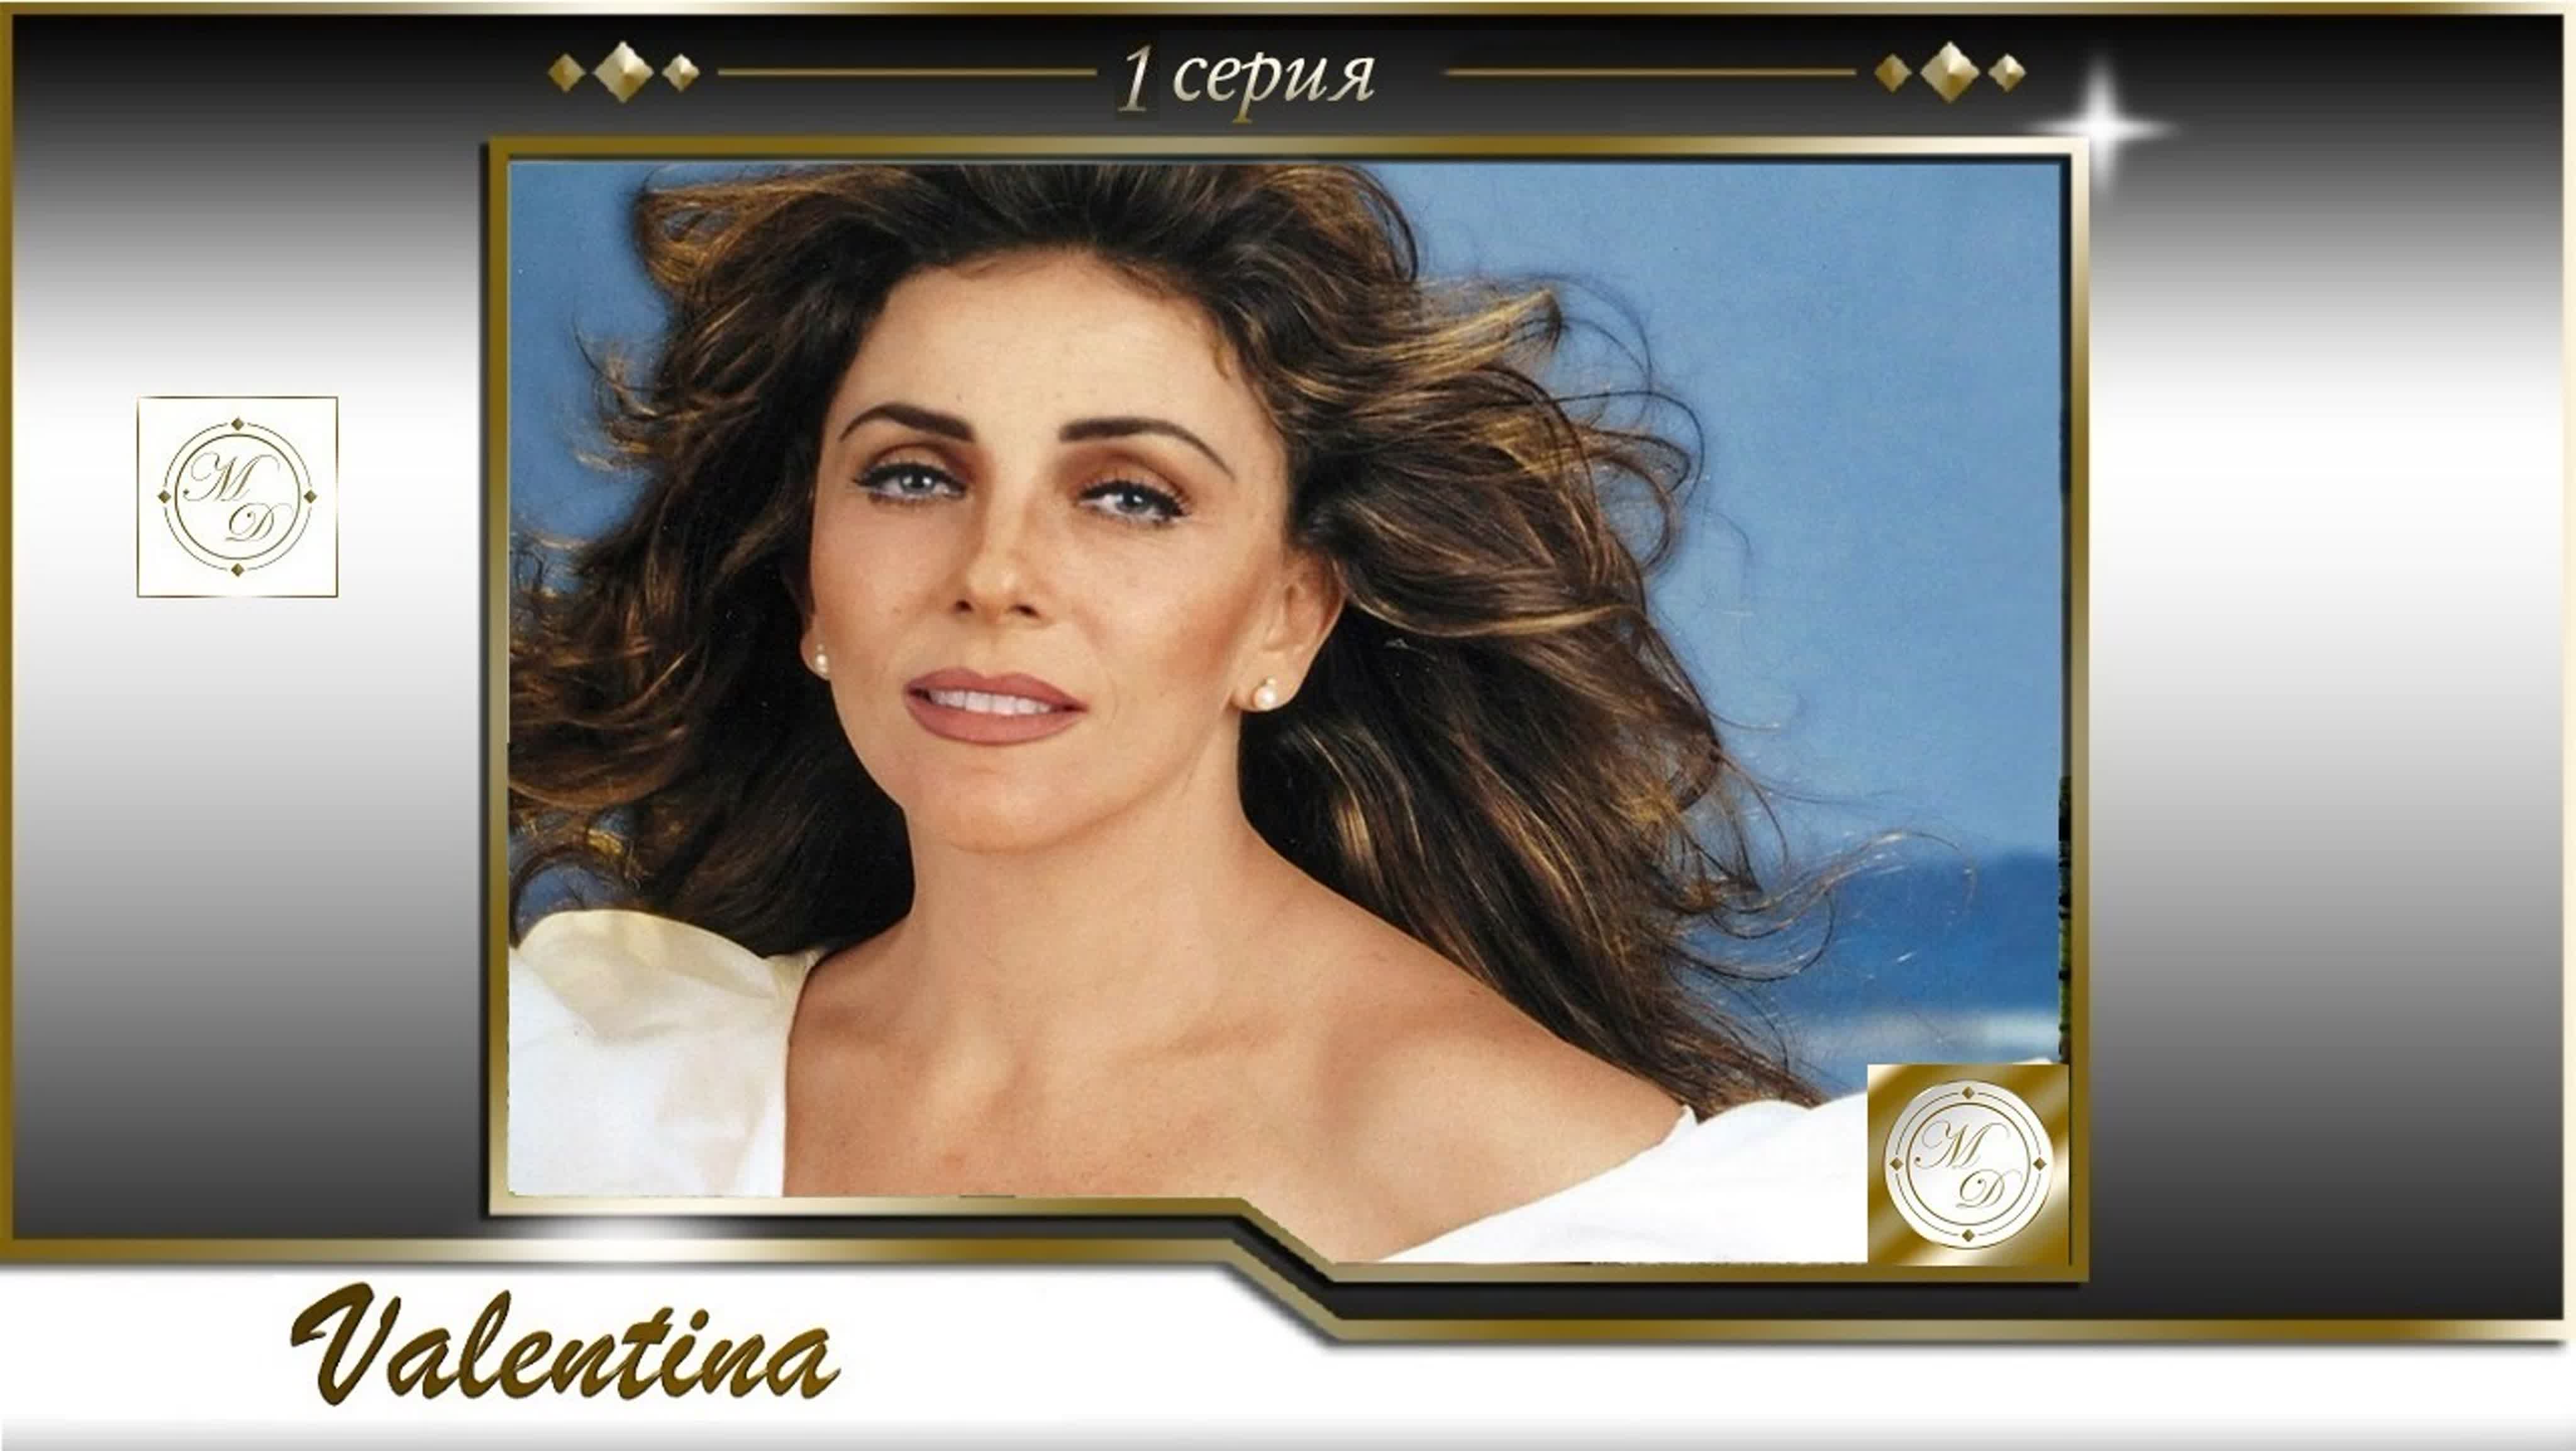 Valentina (Televisa 1993)